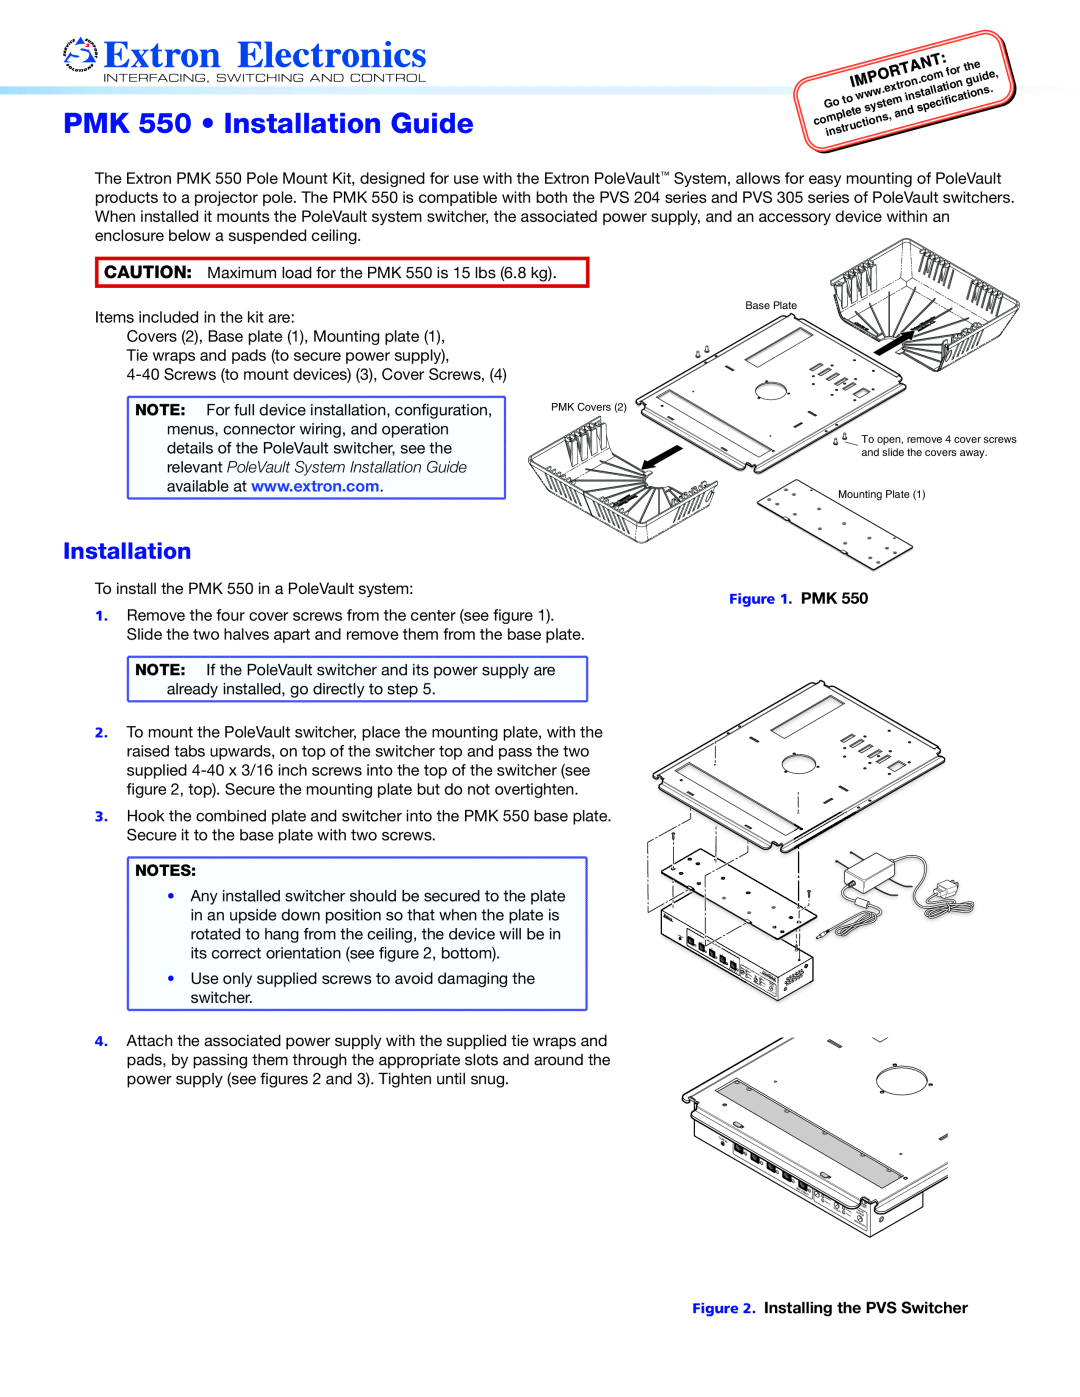 Extron electronic user manual PMK 550 Bracket Kit Installation Guide 